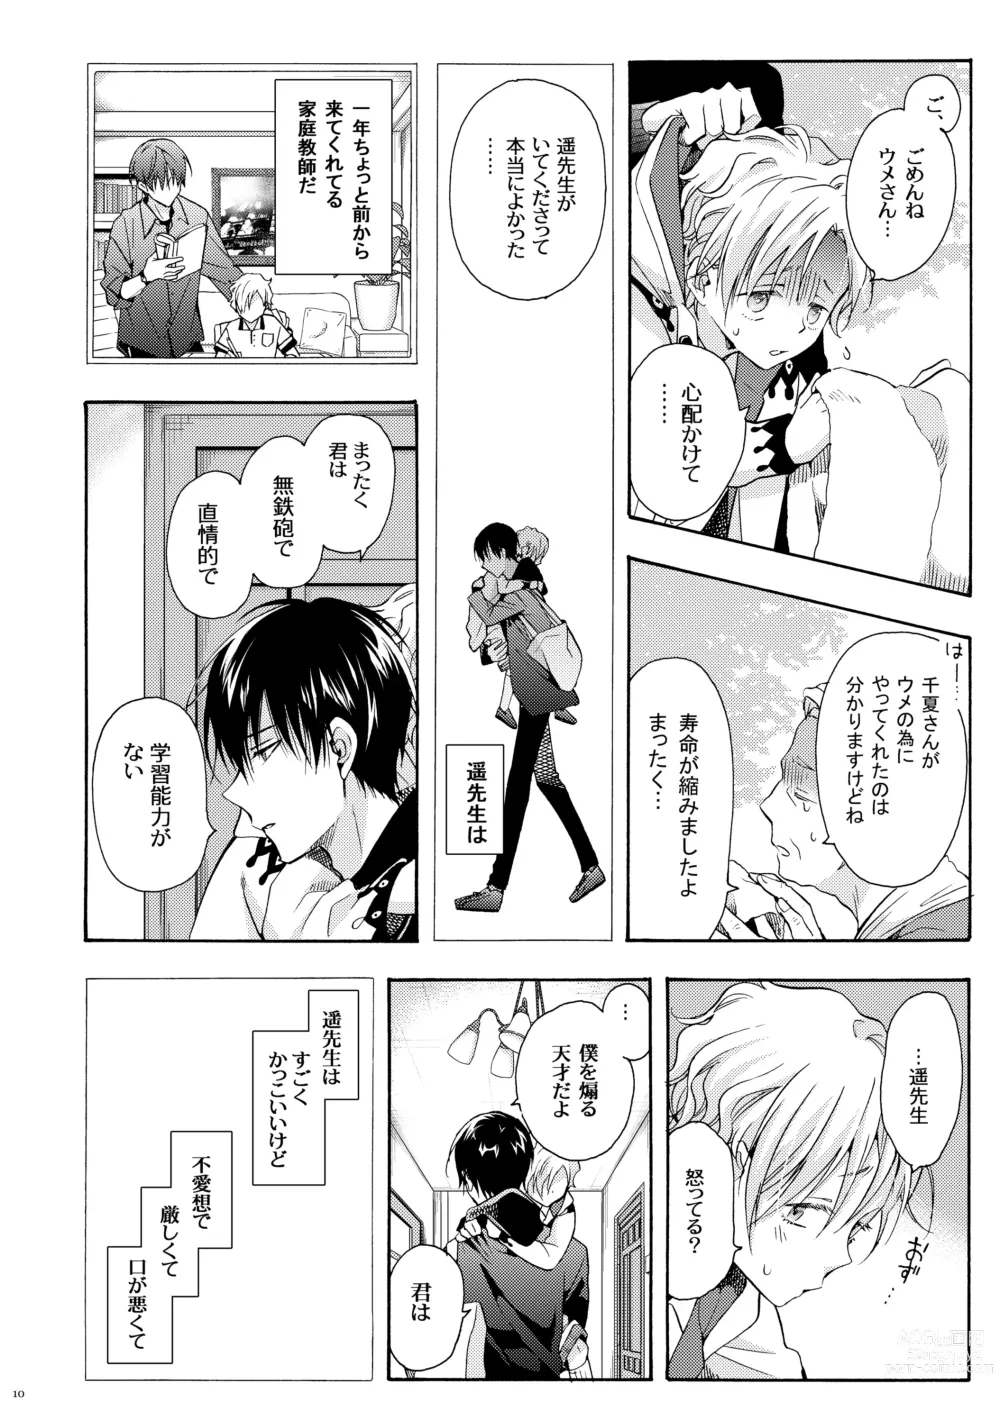 Page 9 of manga Boku no Tame no Omega